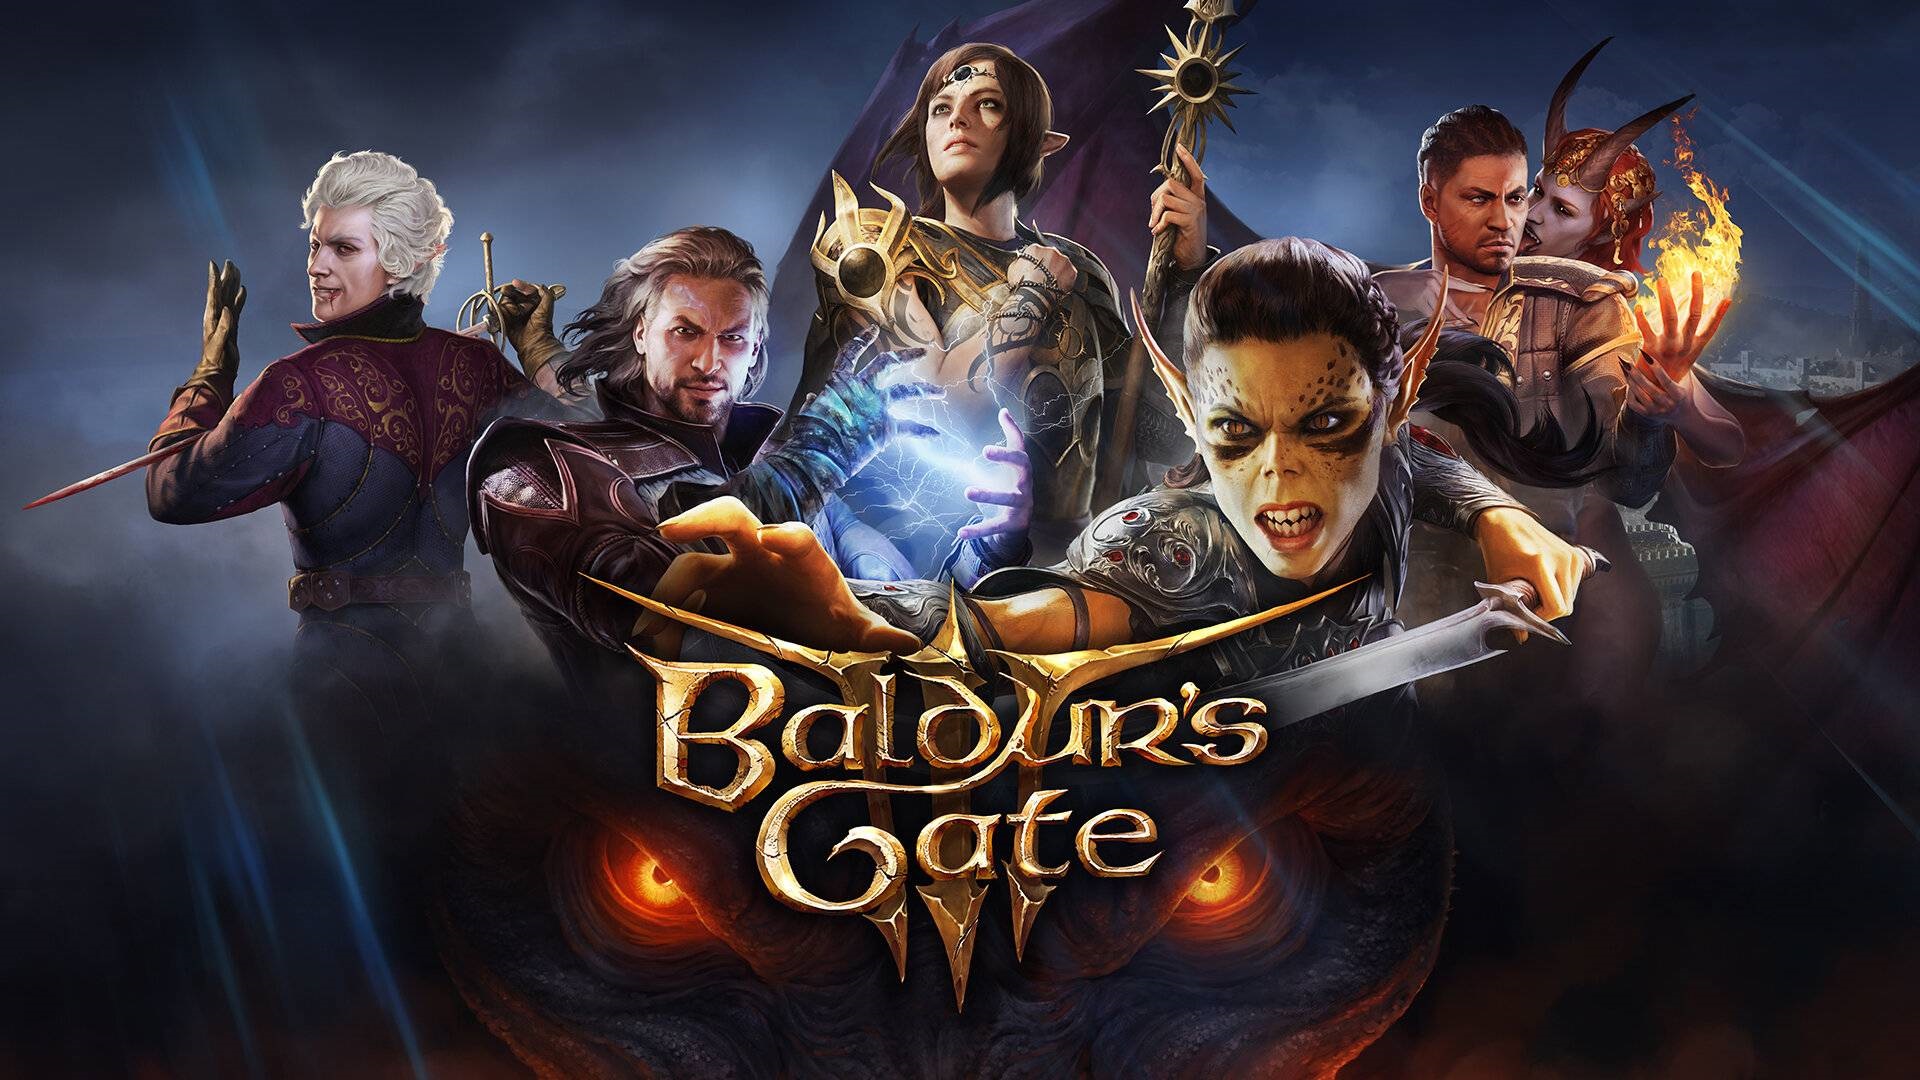 Baldur’s Gate III download the new